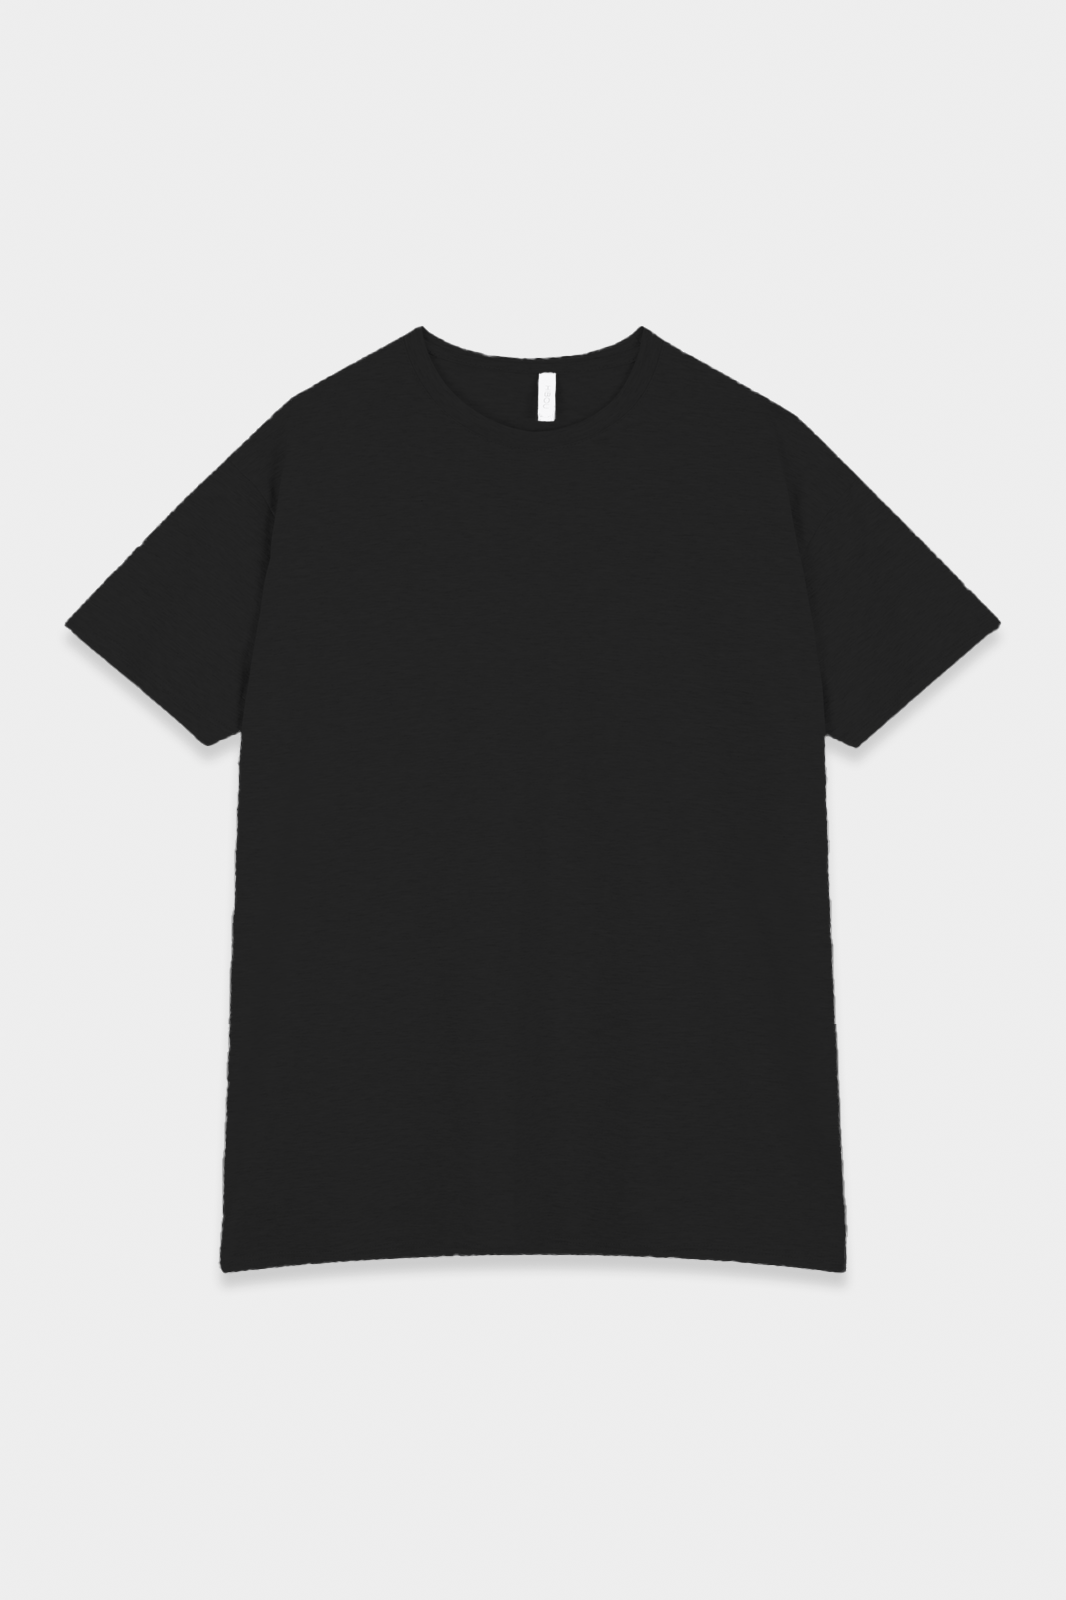 100% Cotton Classic Black T-shirt